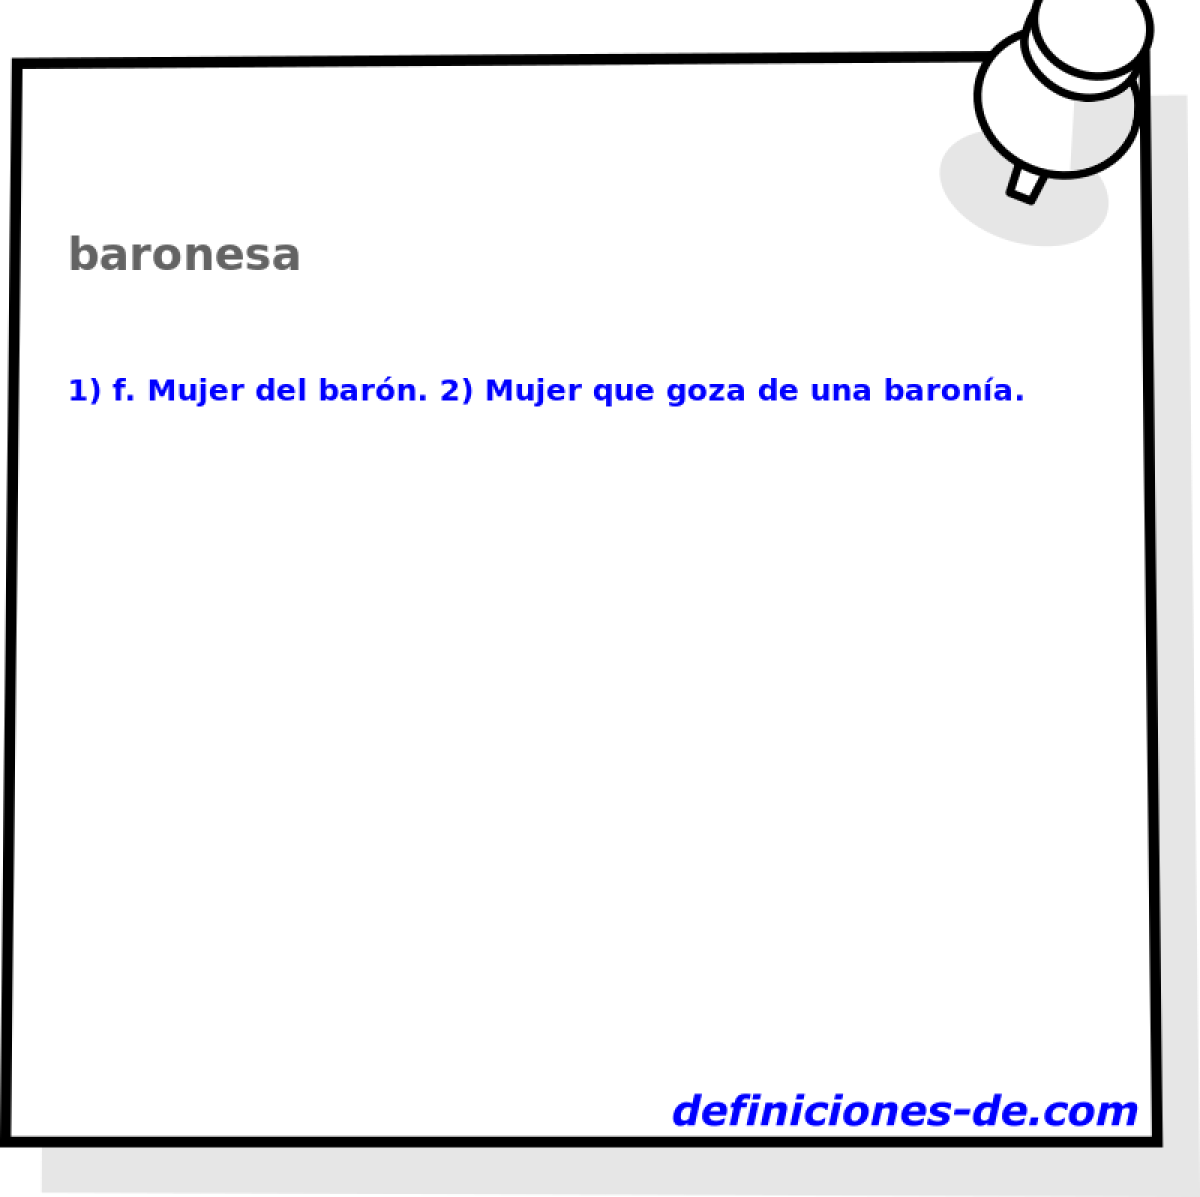 baronesa 